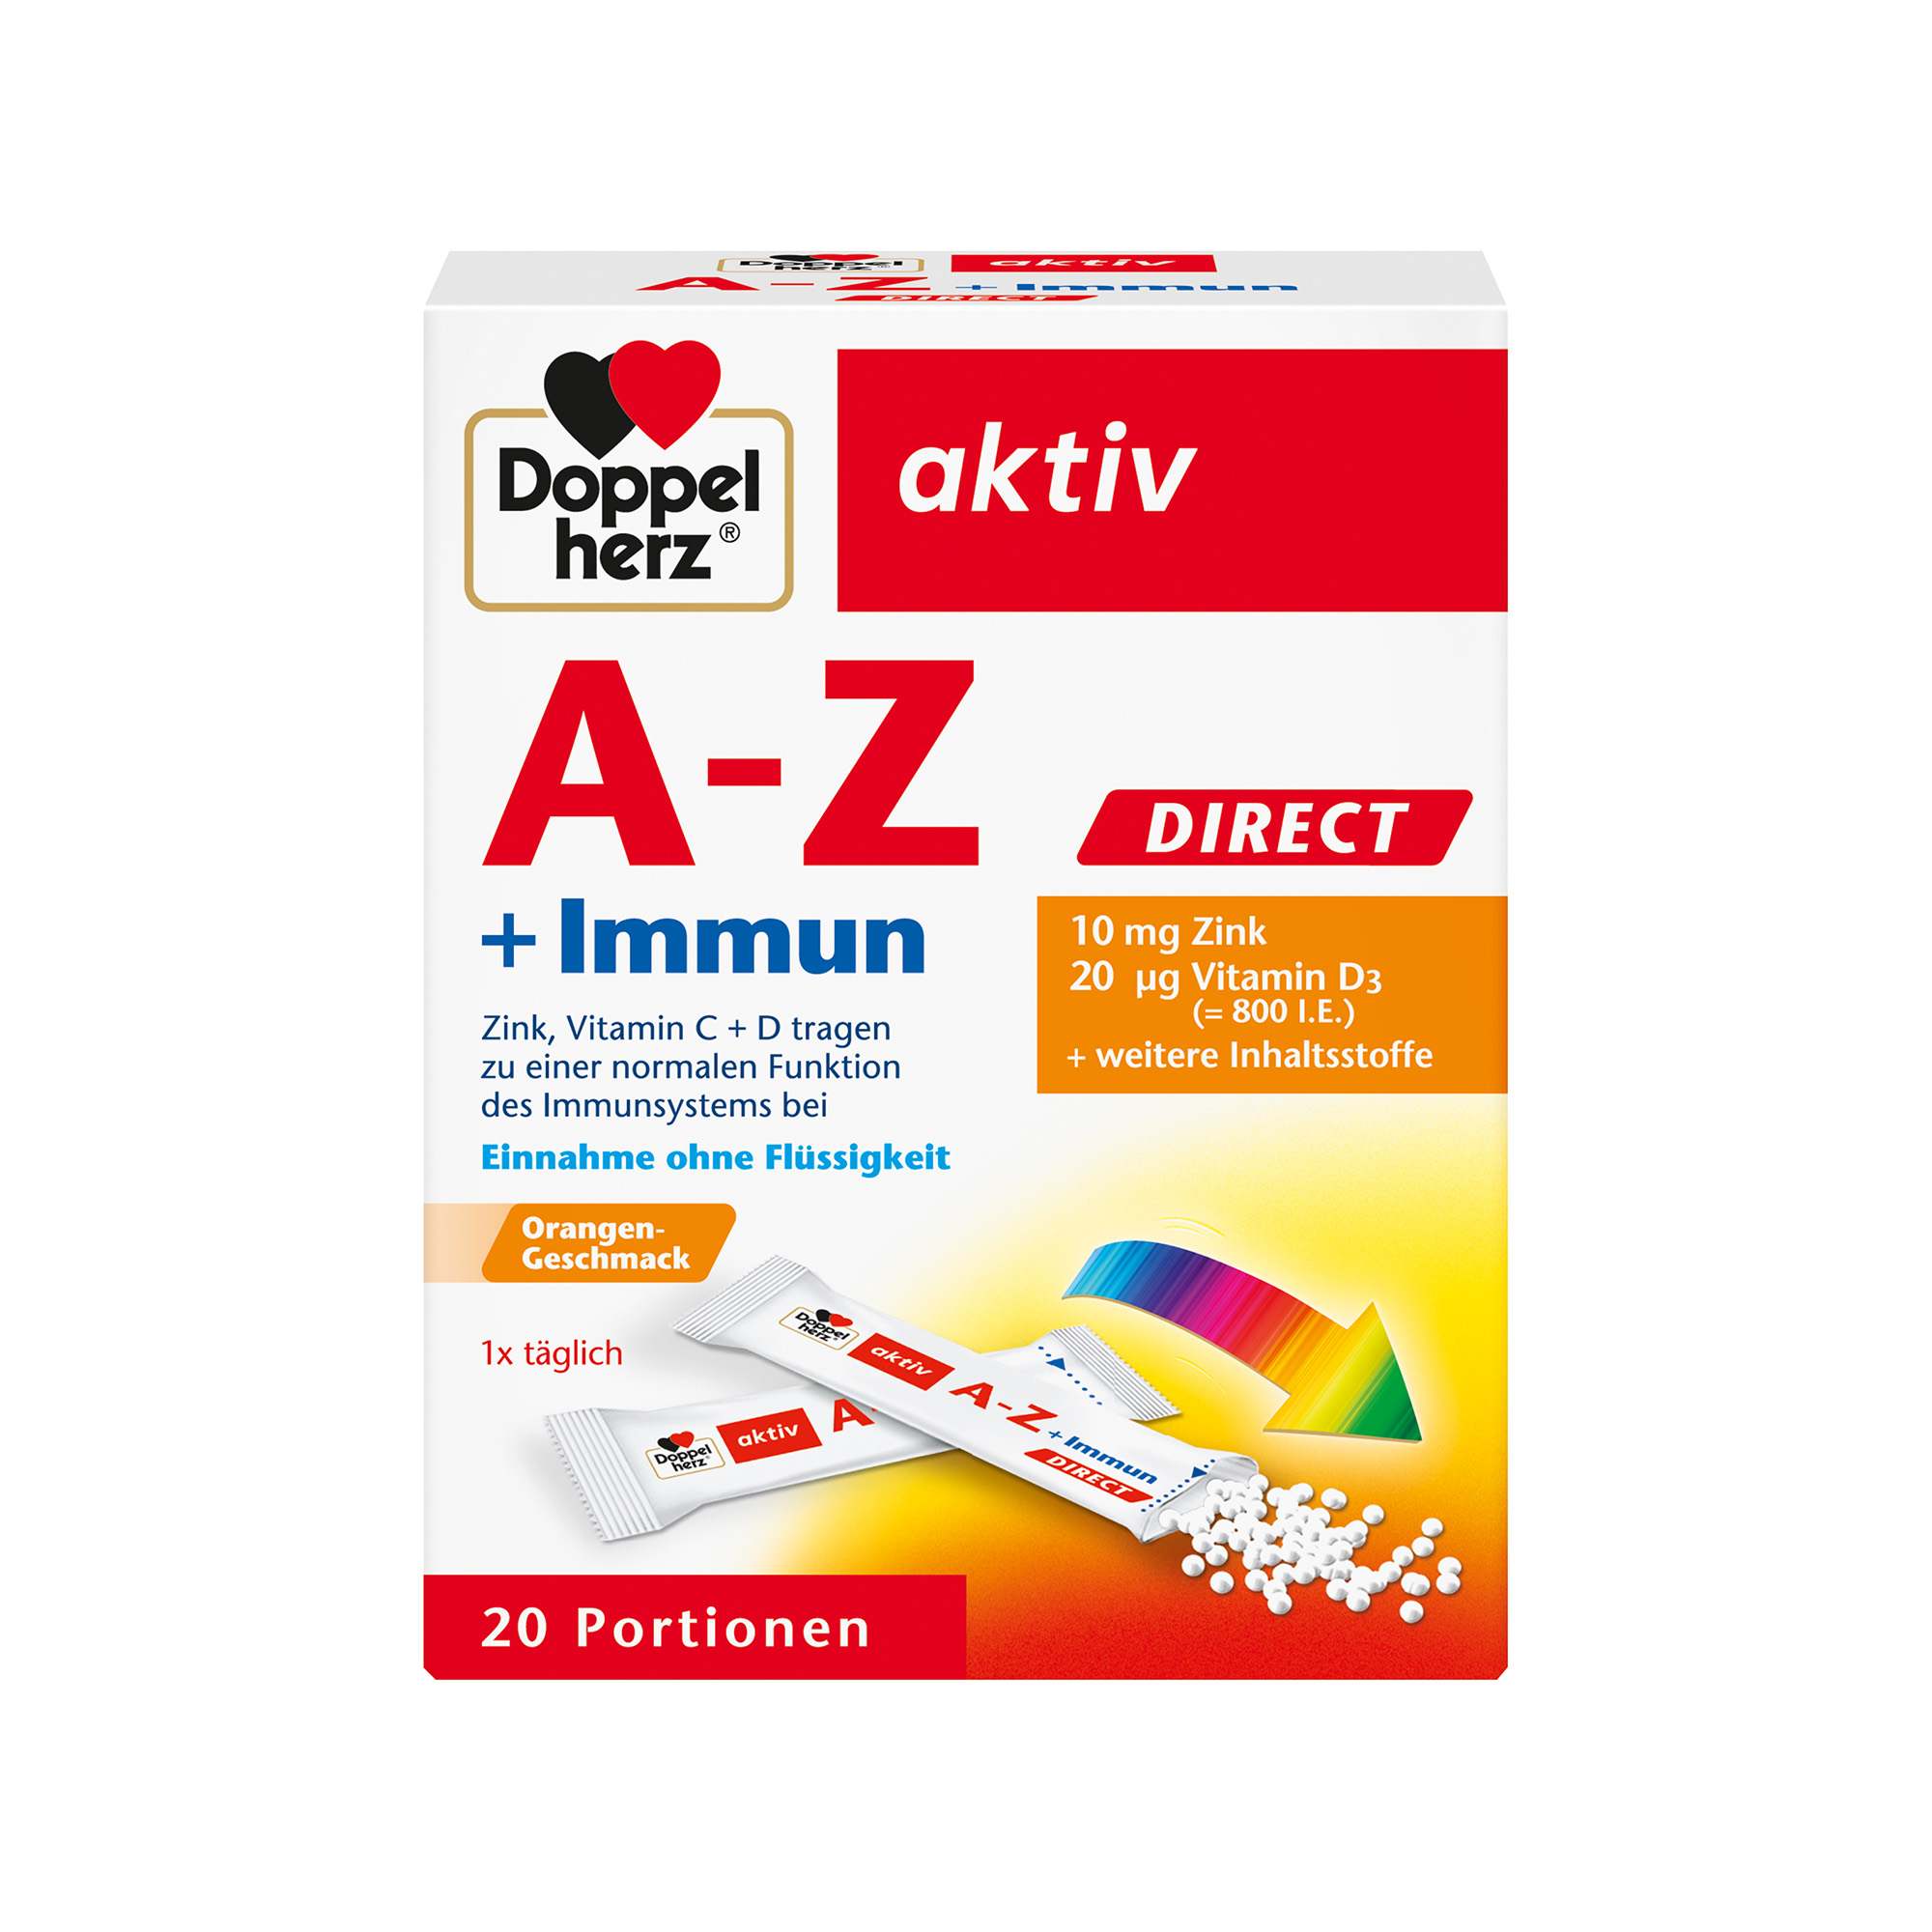 Doppelherz aktiv A-Z + Immun direct, 20 Portionen